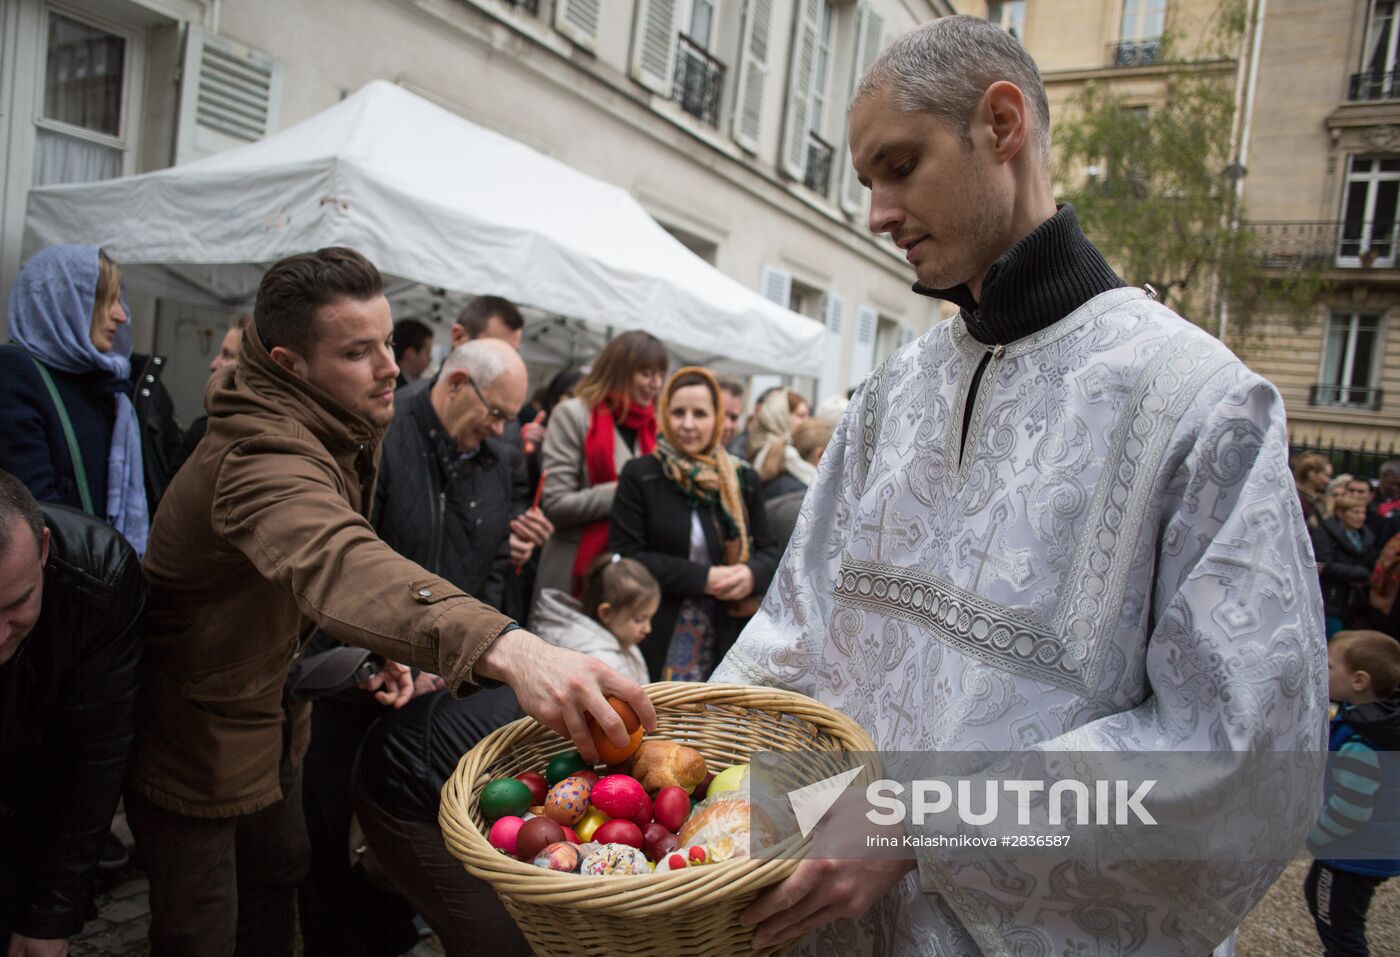 Easter celebrations in Paris